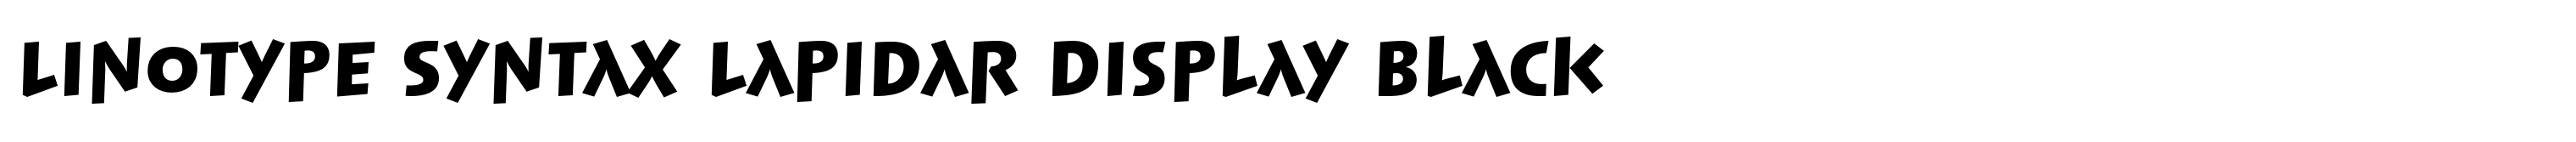 Linotype Syntax Lapidar Display Black